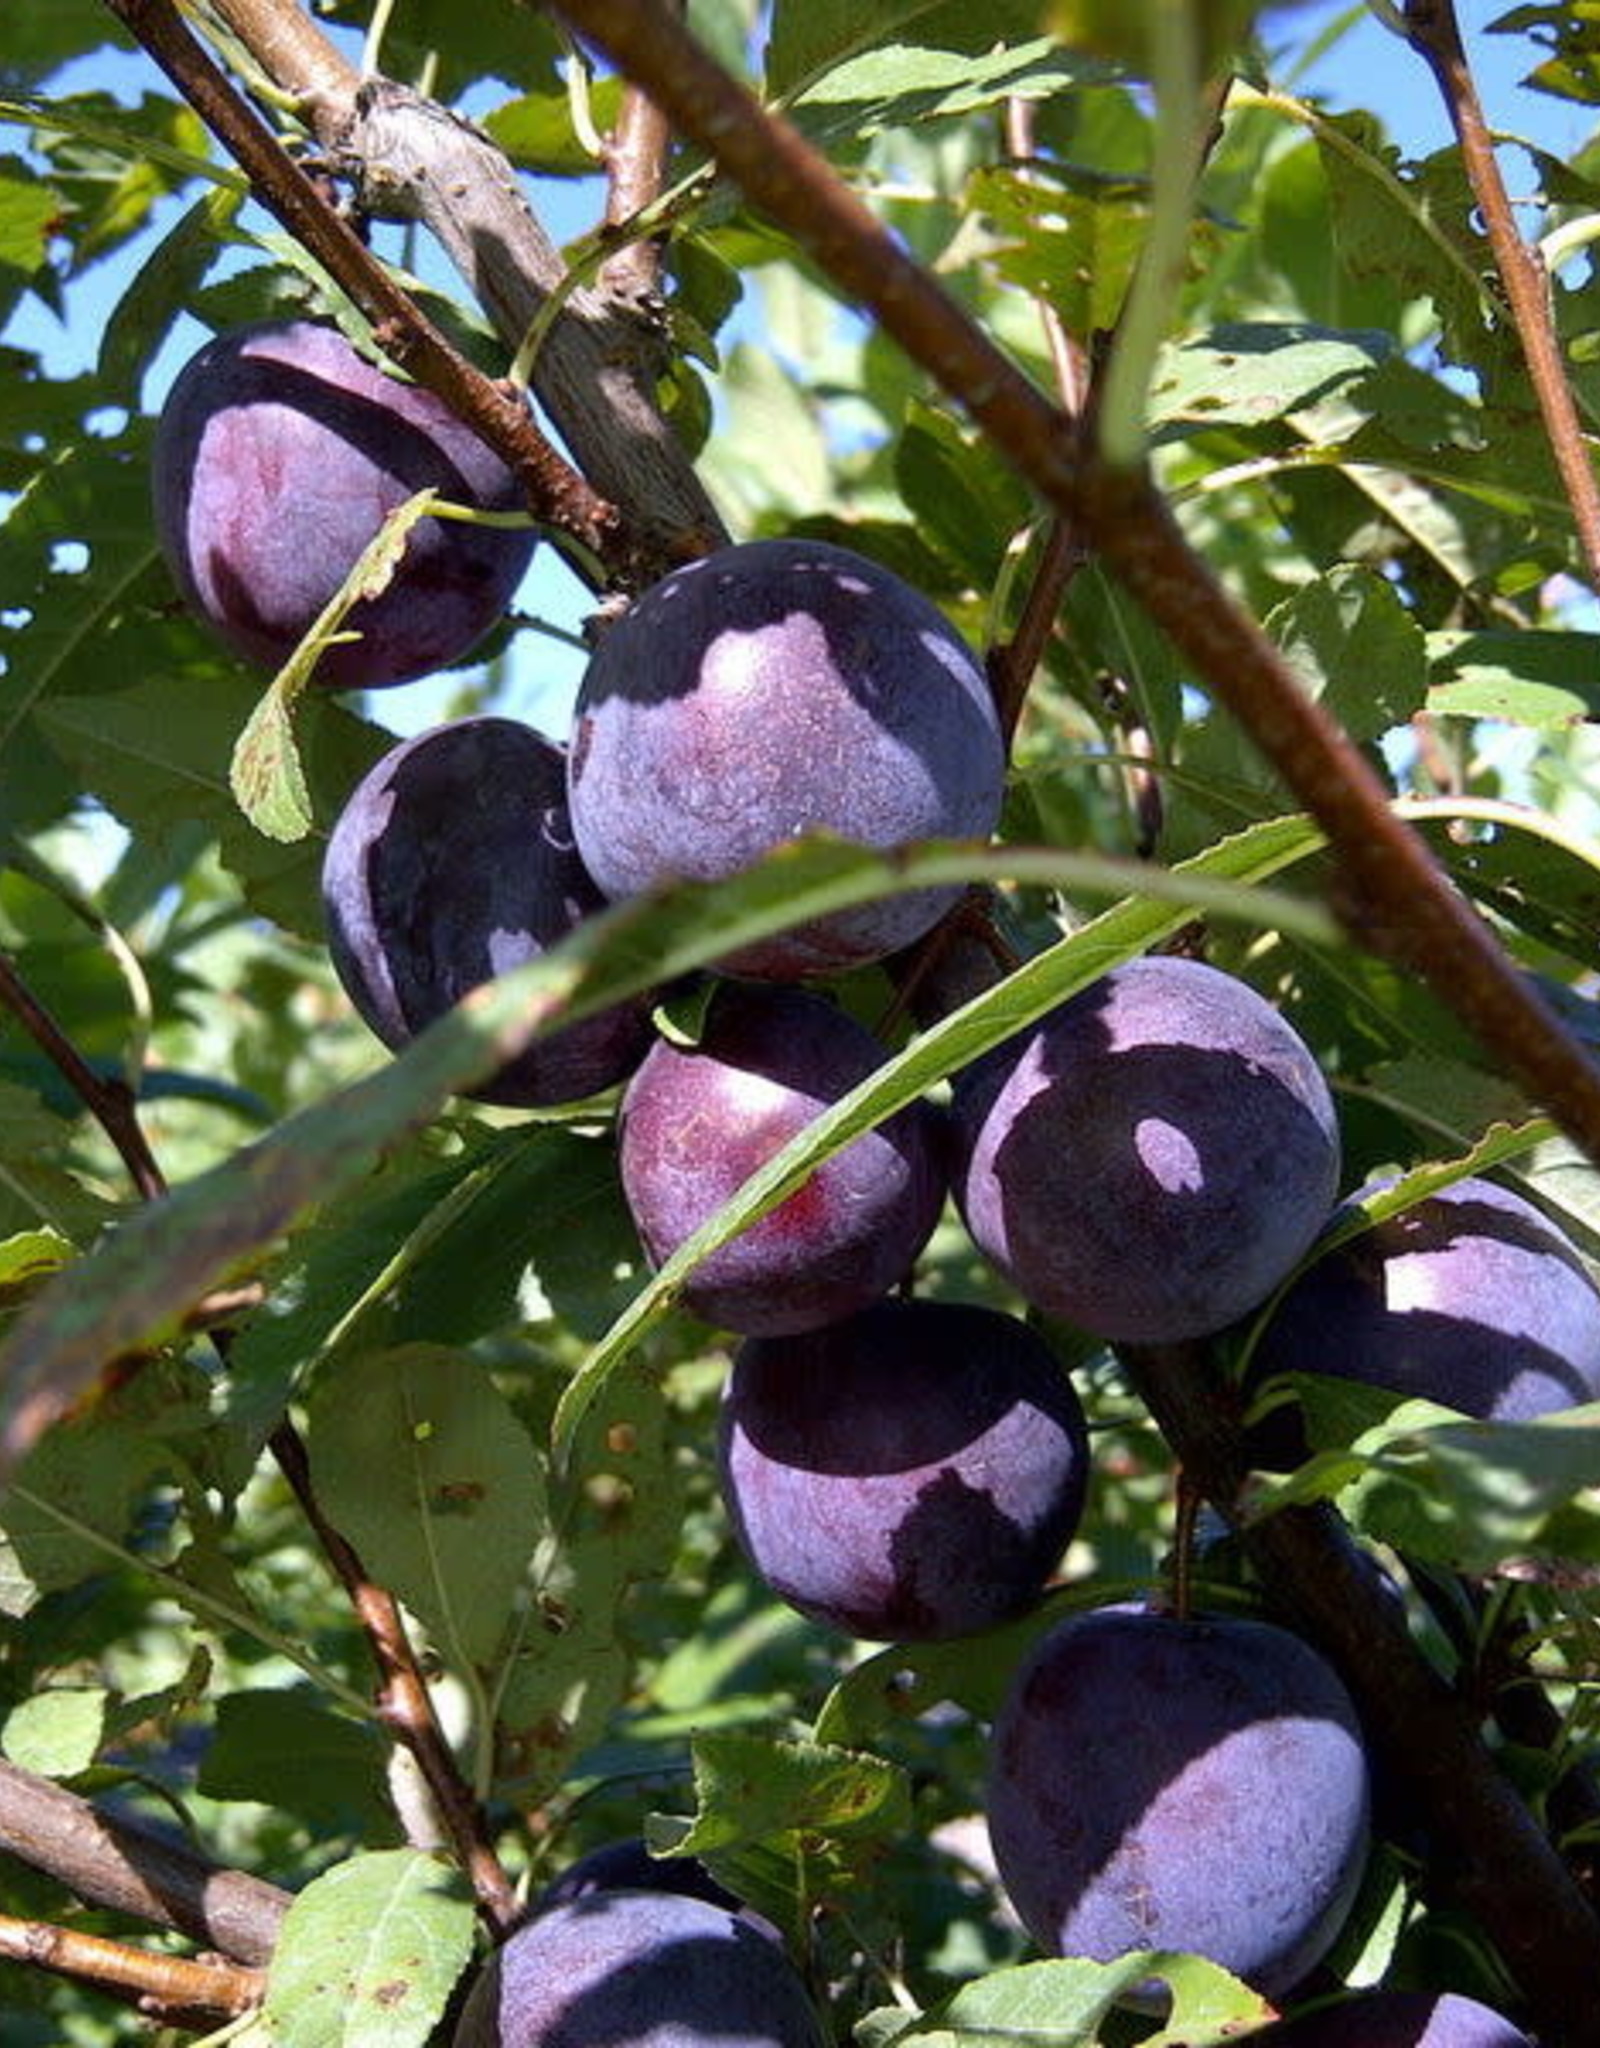 Bron and Sons Prunus bess. x P. salicina 'Sapalta'  Cherry-Plum #5 CVIG4